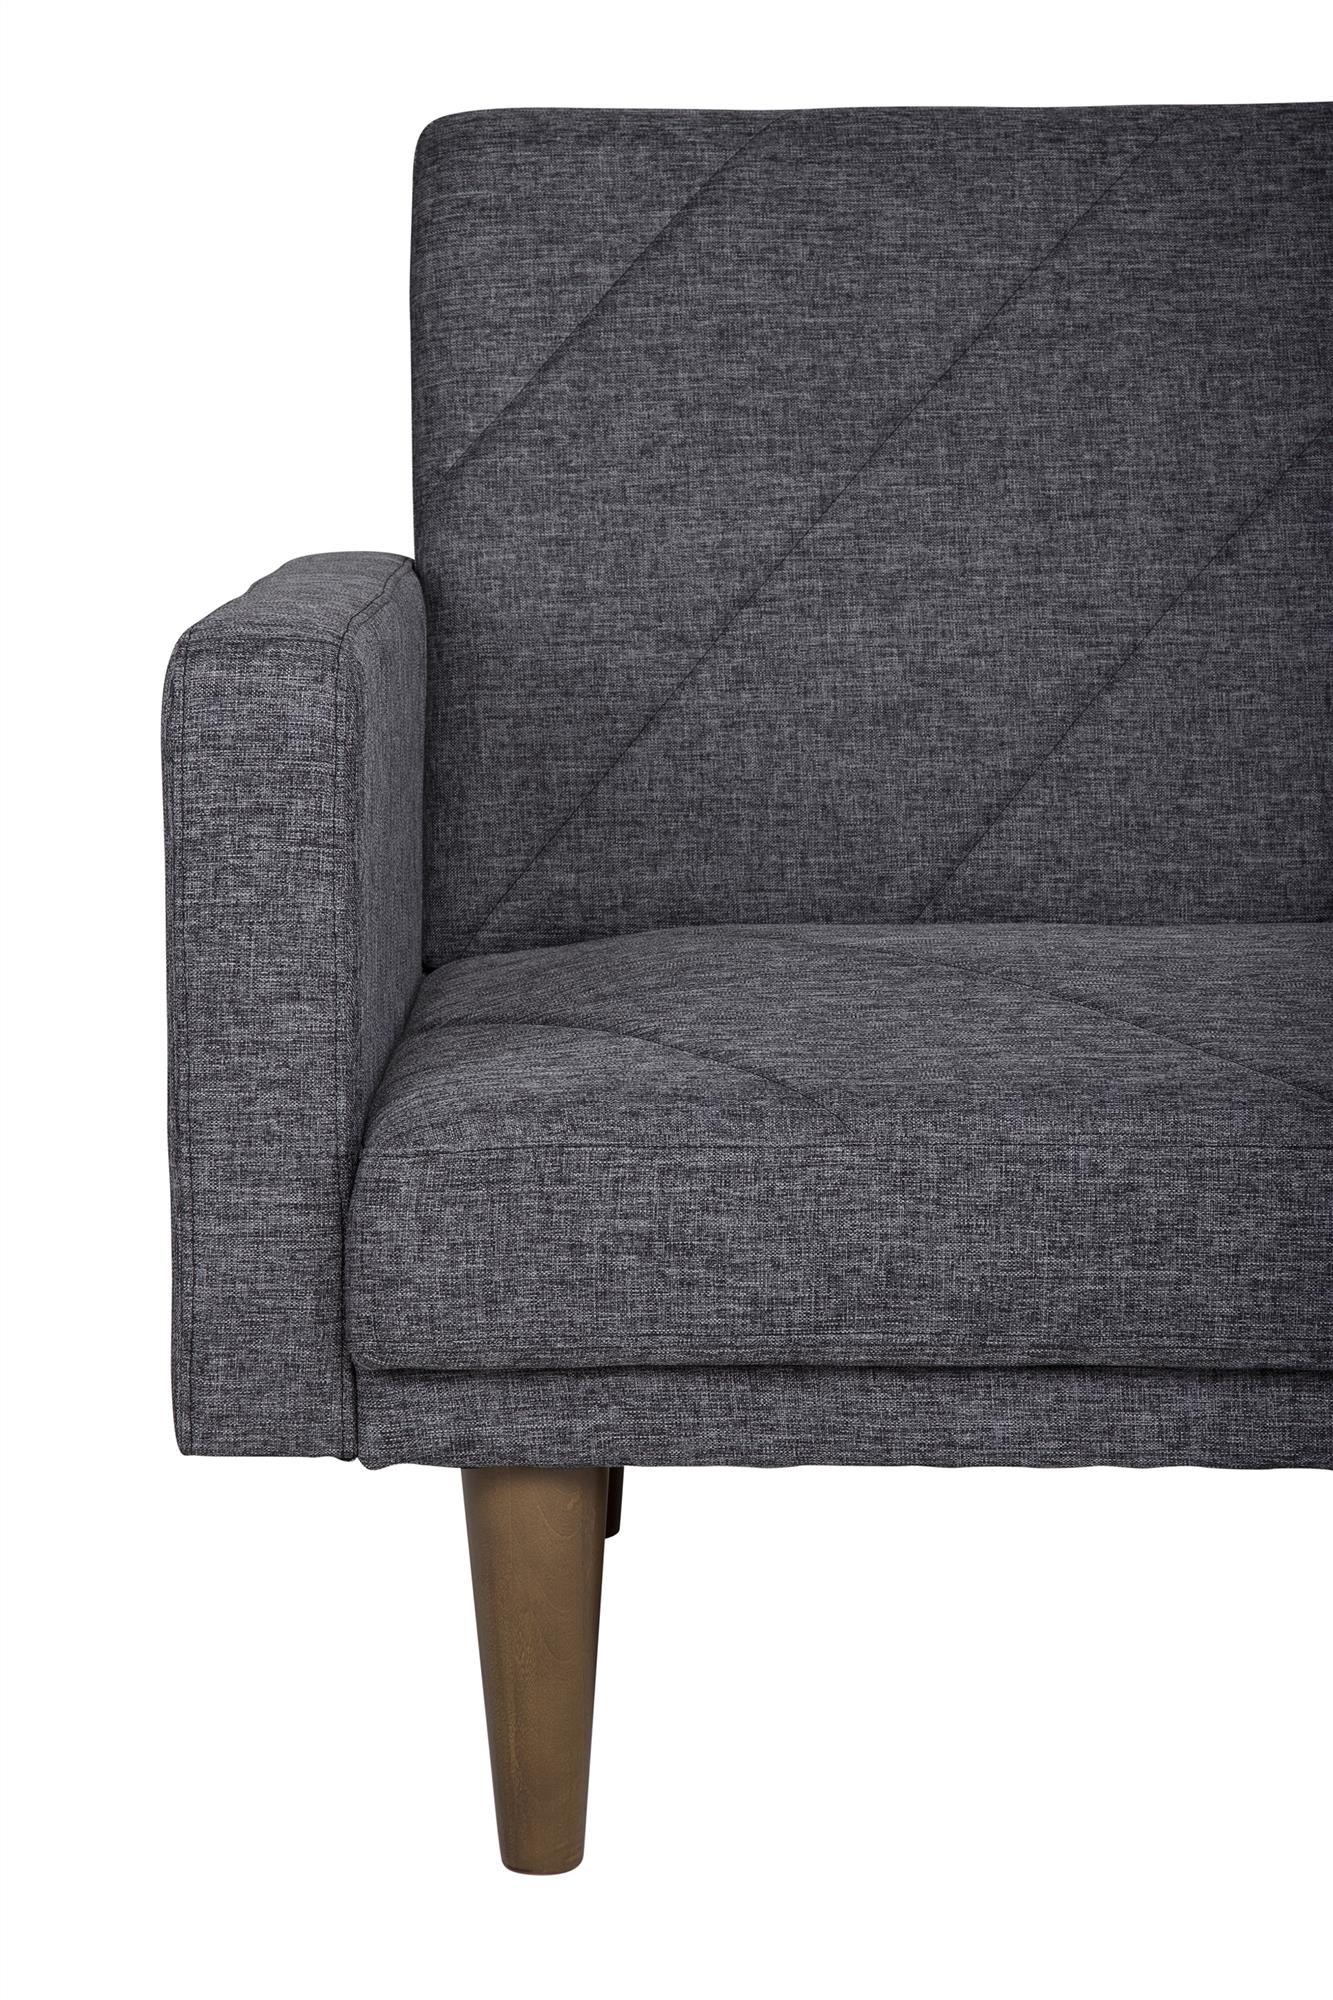 Paxson Futon with Solid Wood Legs and Diagonal Design - Dark Gray